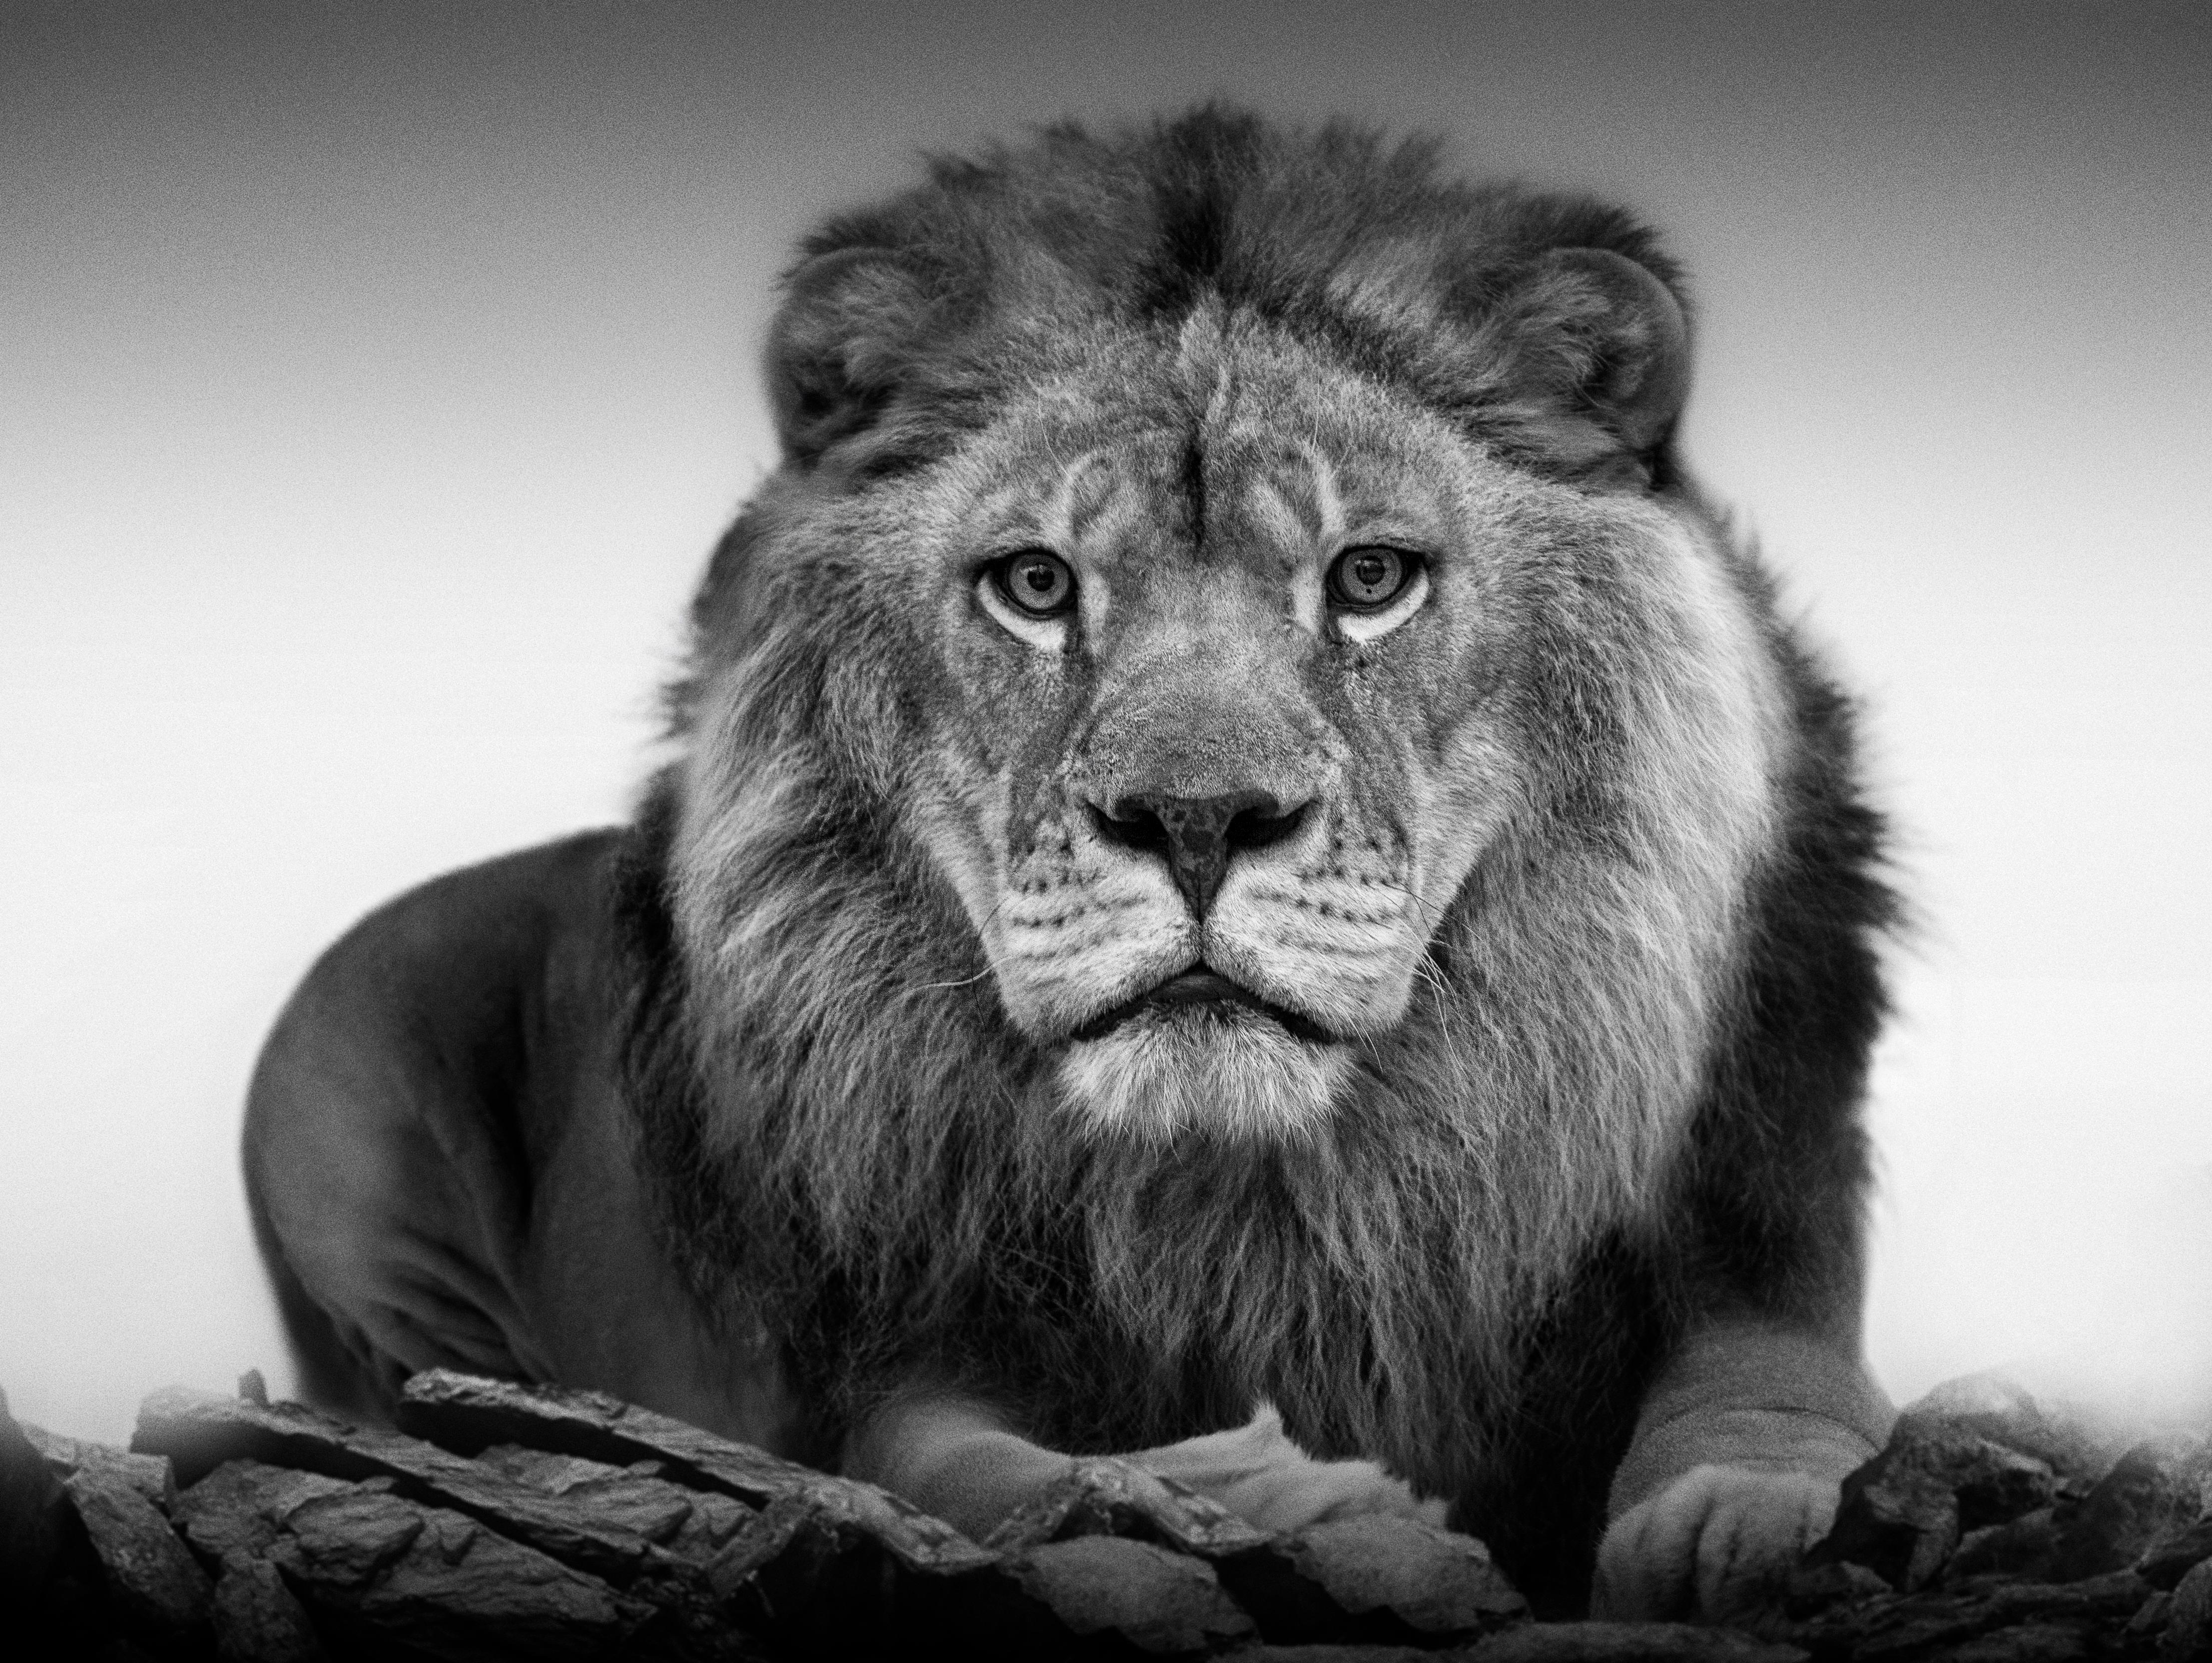 Shane Russeck Black and White Photograph -  Lion Portrait - 36x48 Black & White Photography, Photograph of African lion